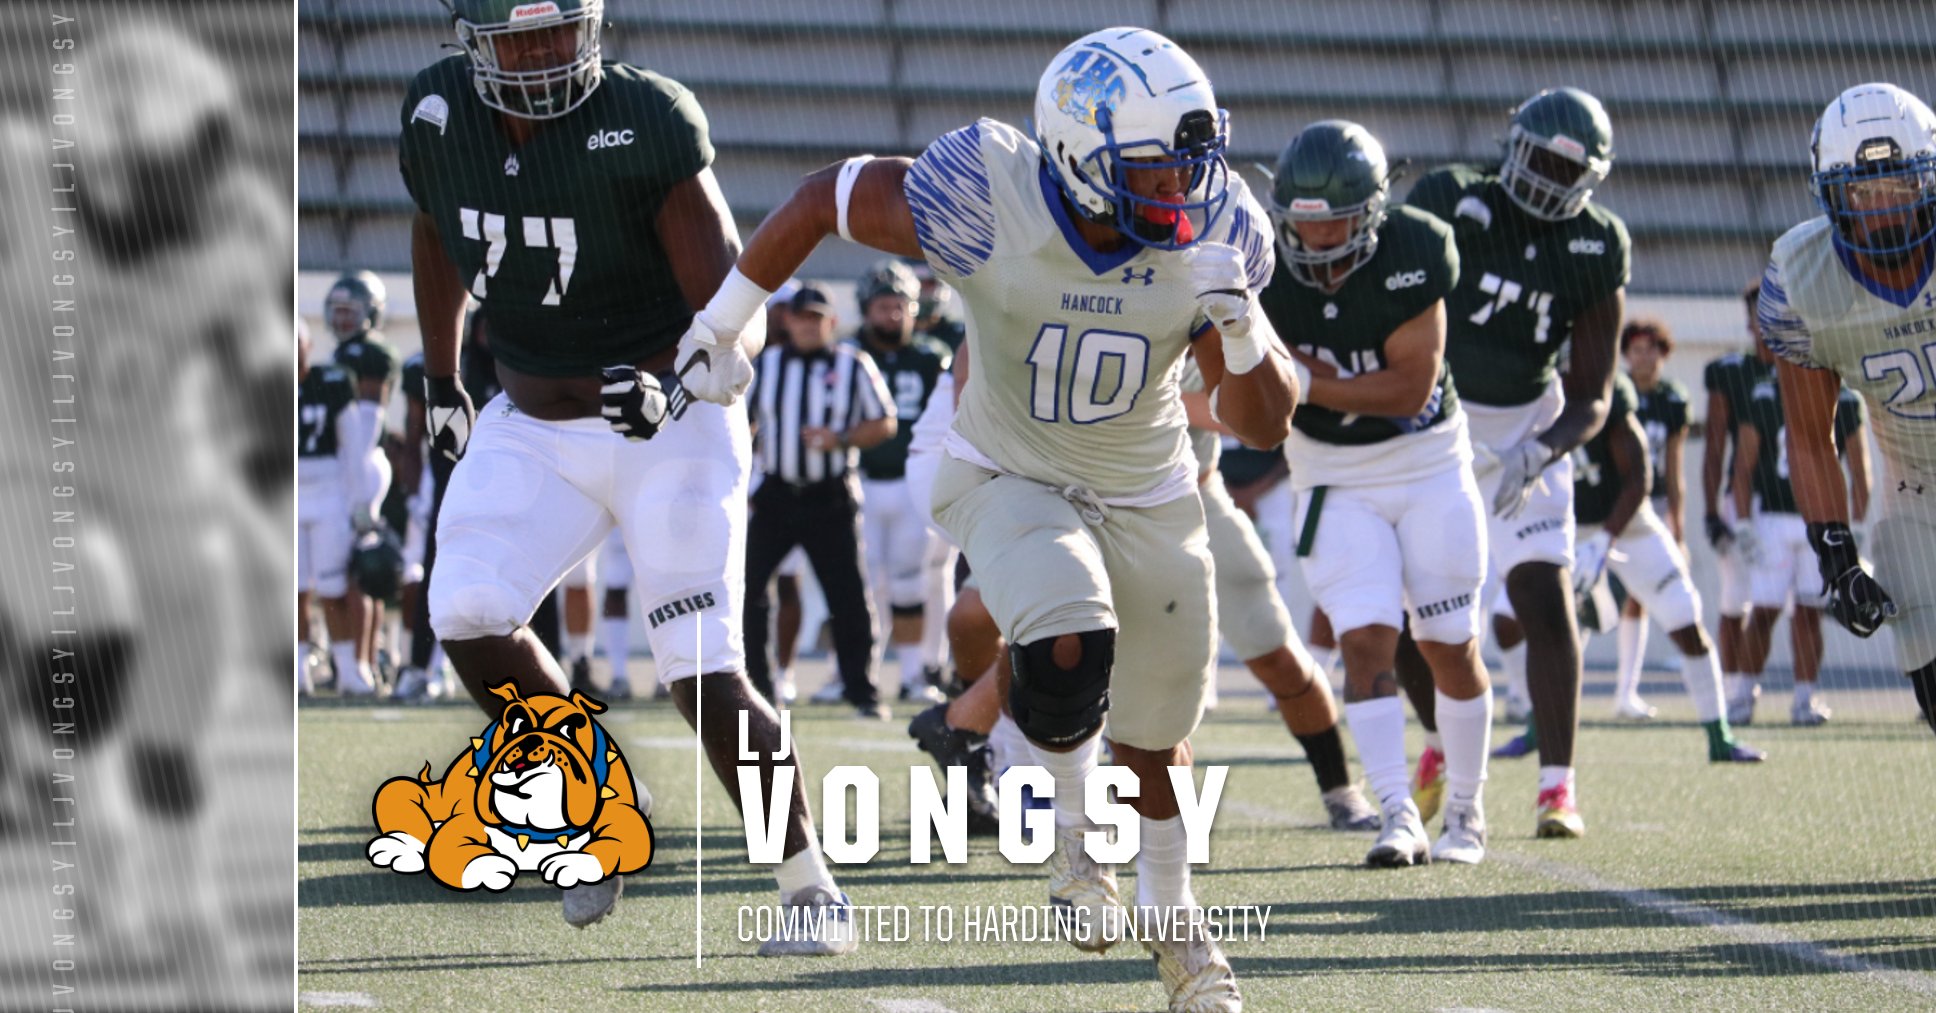 Football's LJ Vongsy Commits to Harding University